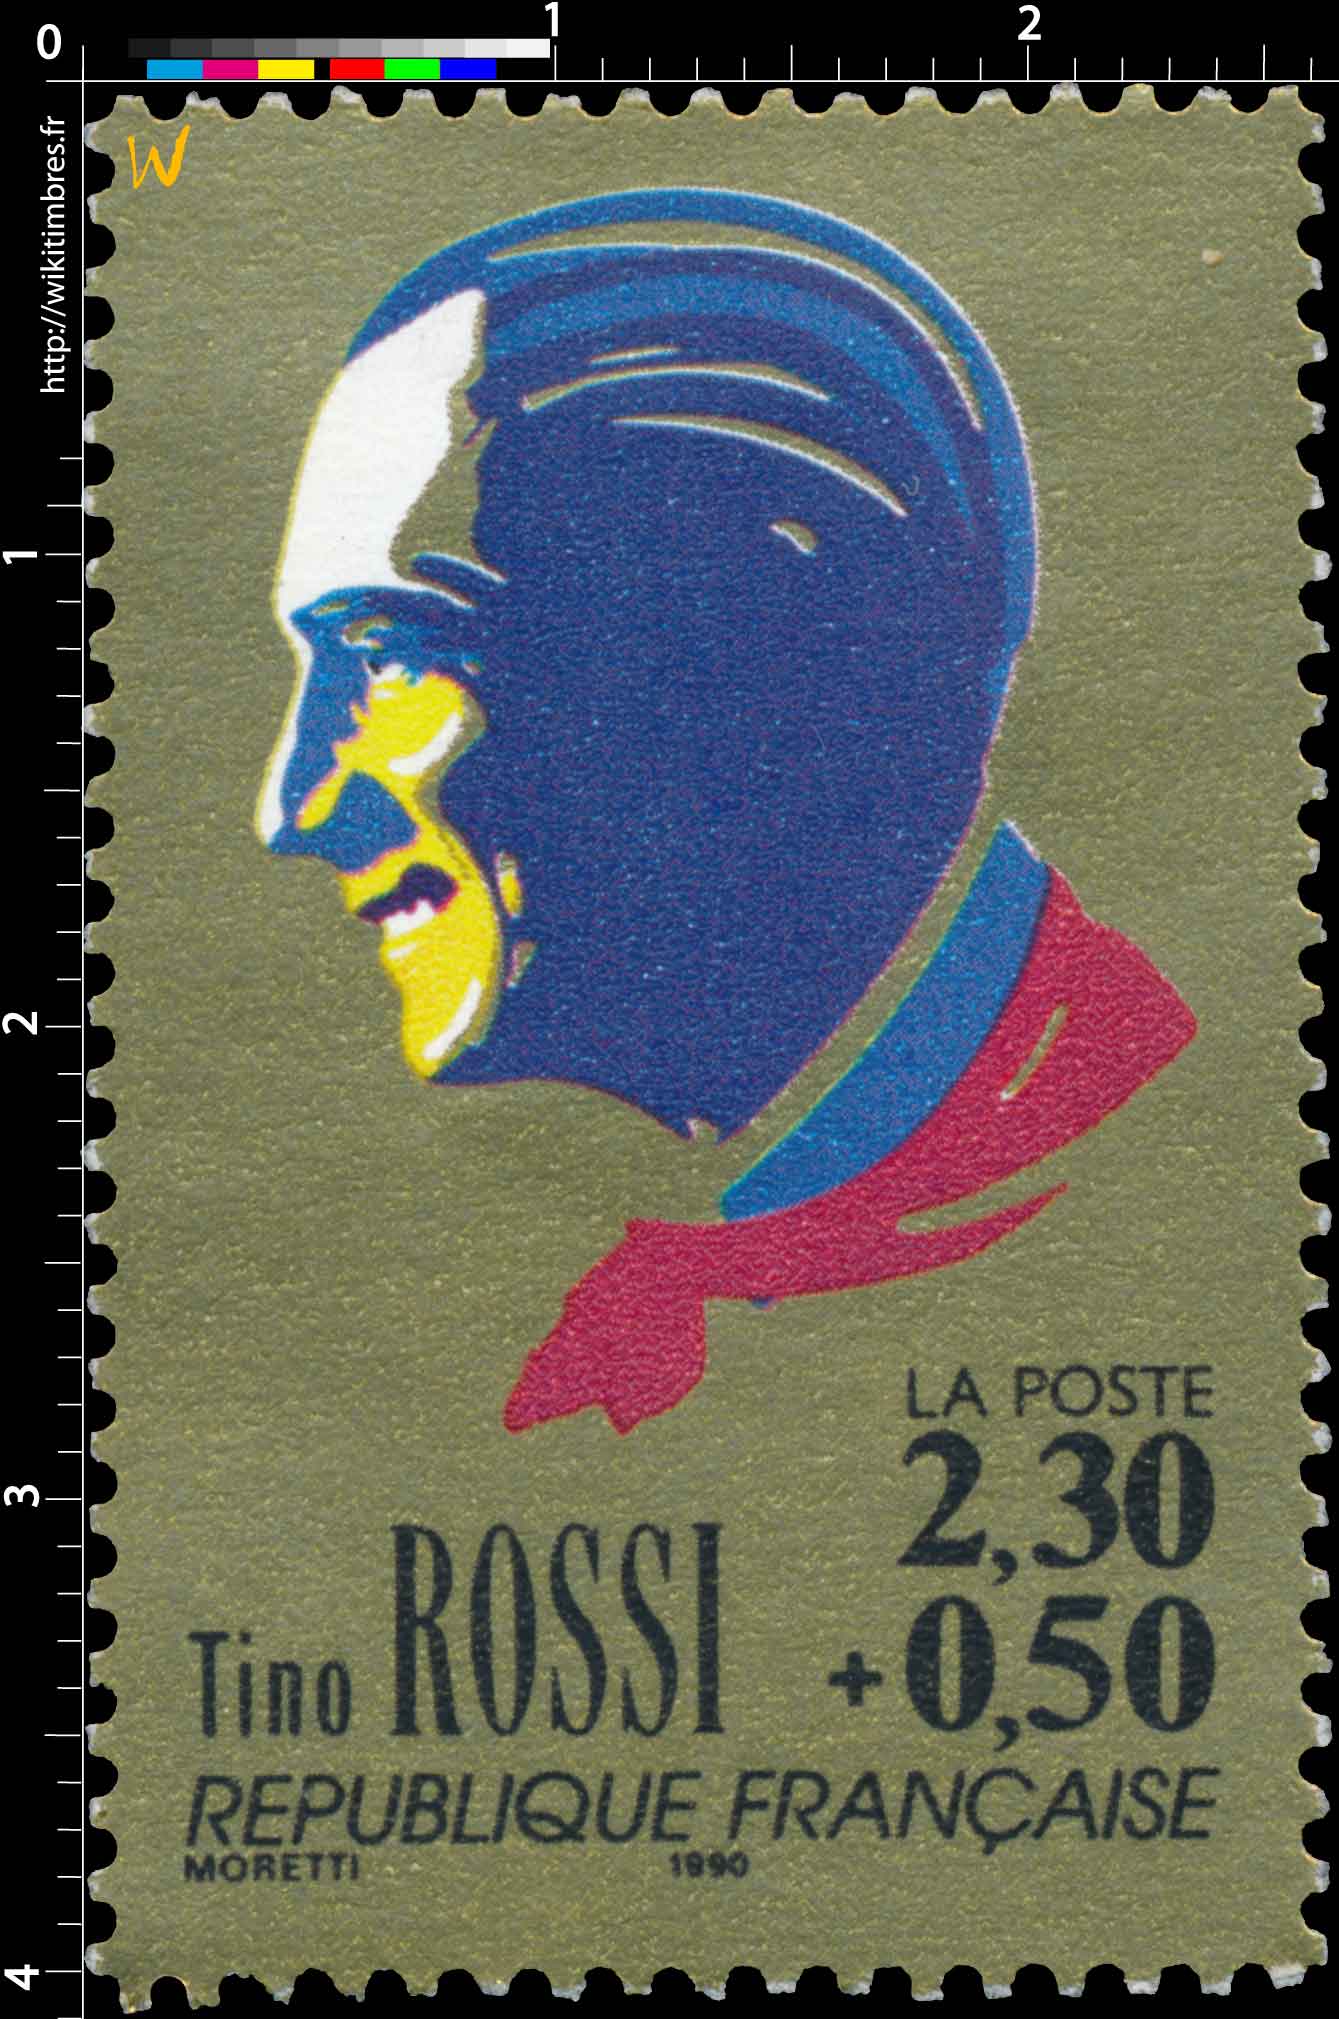 1990 Tino ROSSI